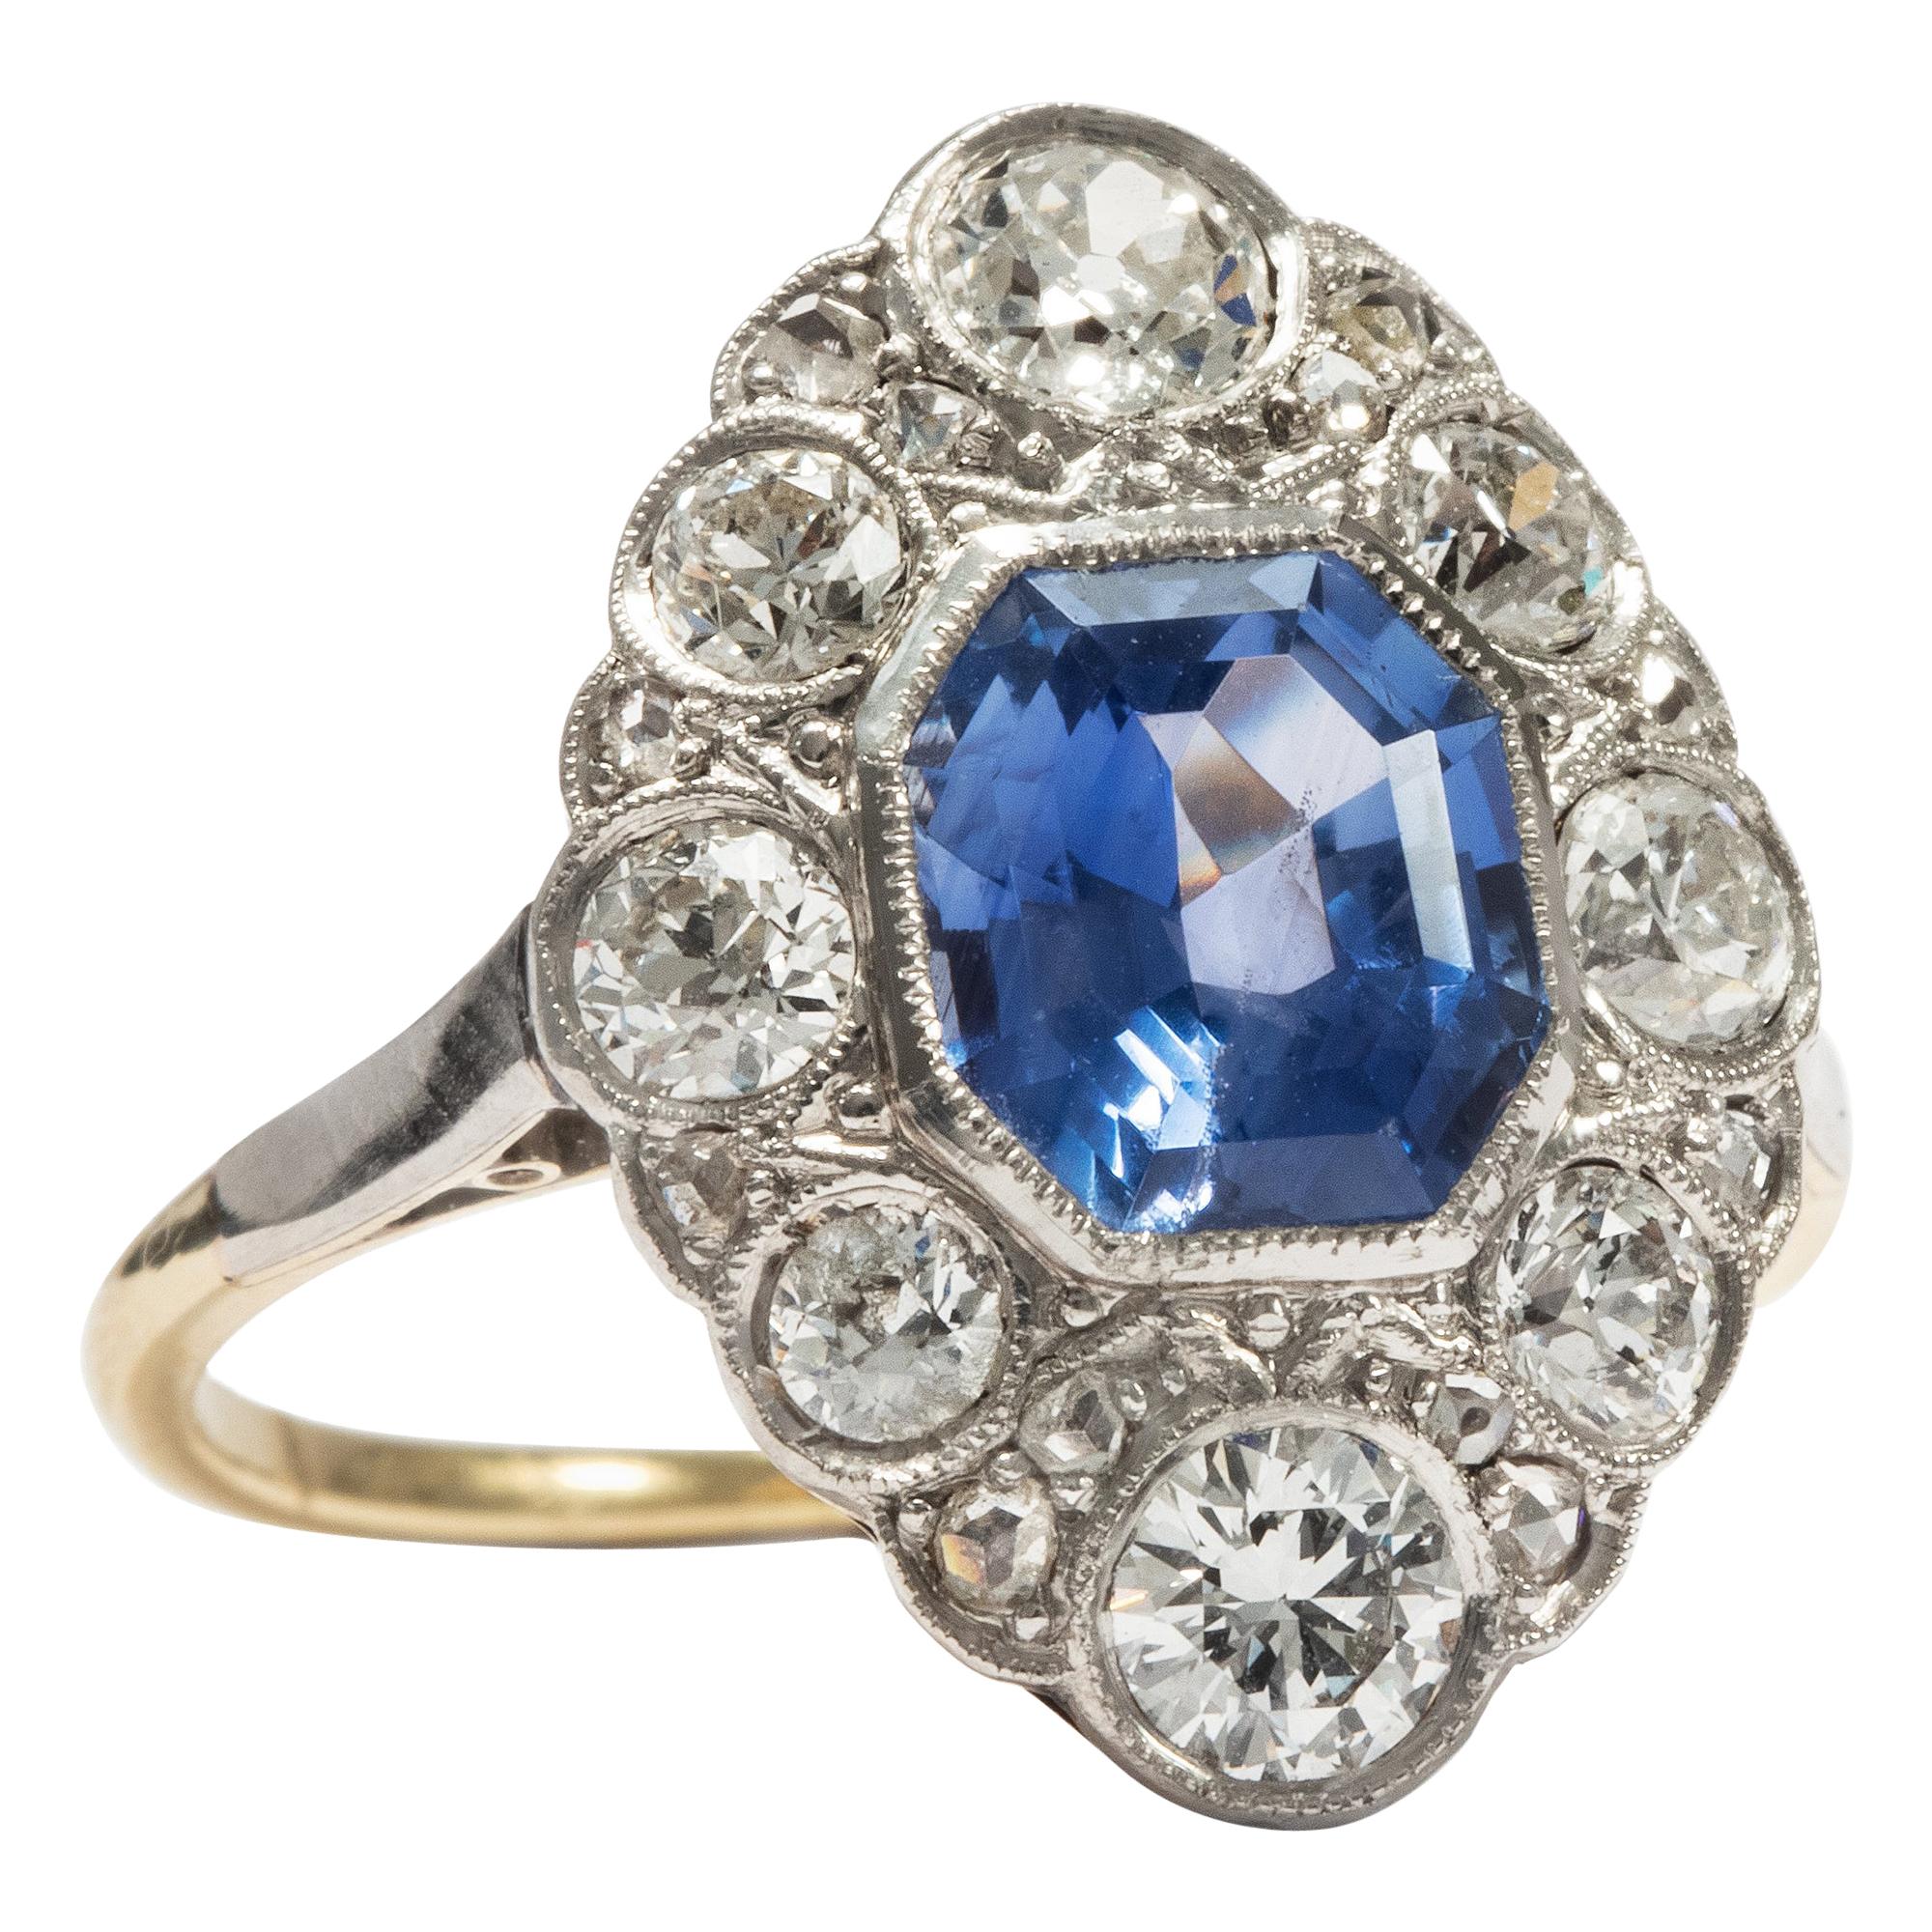 Antique Edwardian circa 1910, Certified 2.05 Carat No Heat Sapphire Diamond Ring